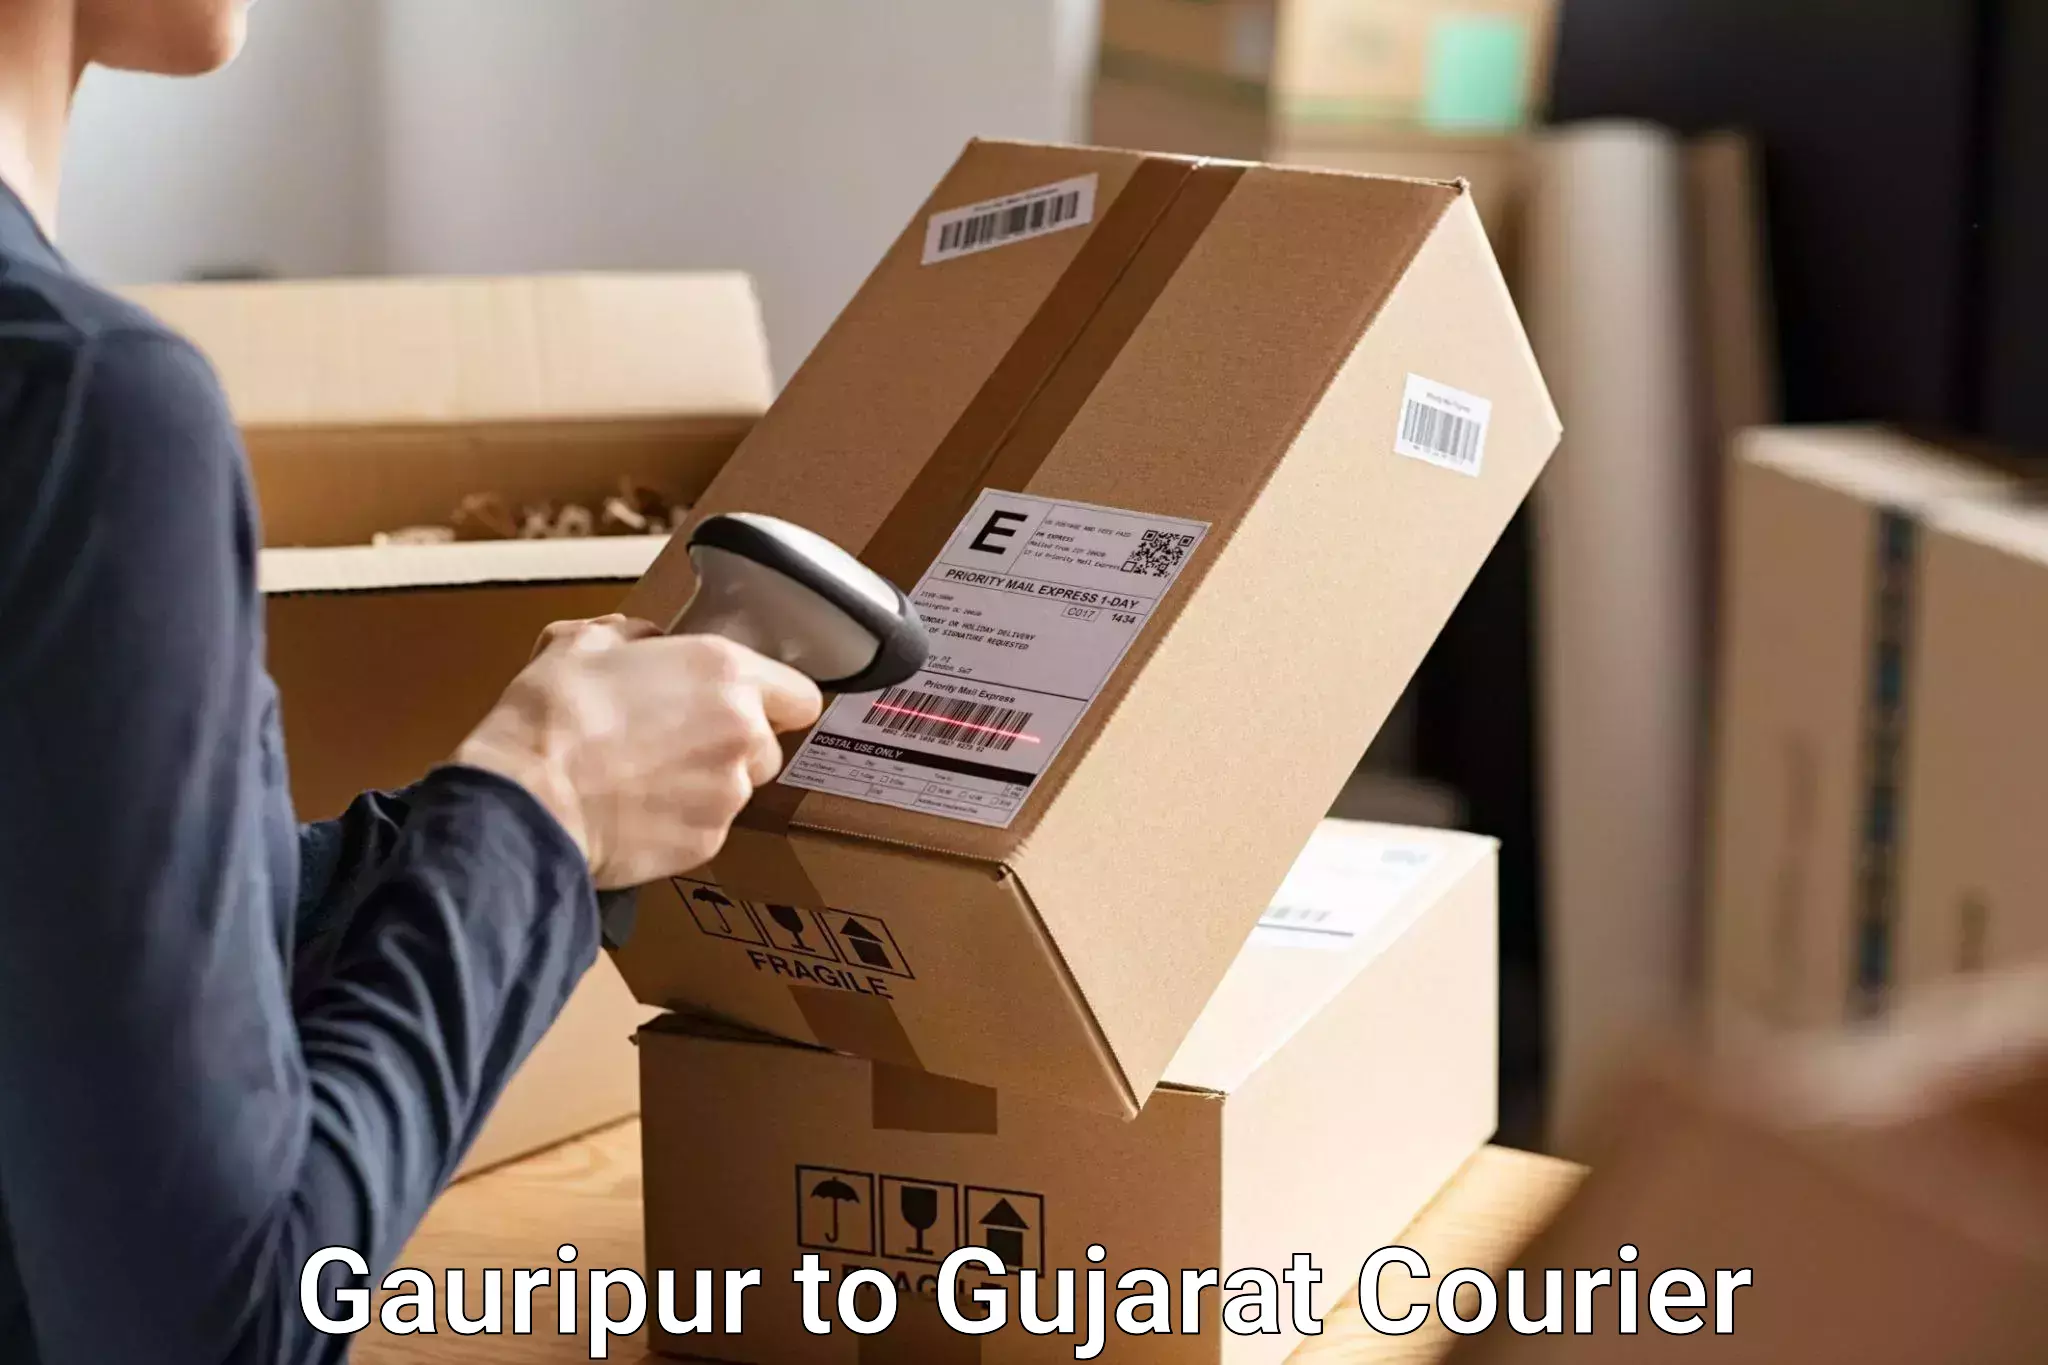 Luggage shipment specialists Gauripur to Kadodara